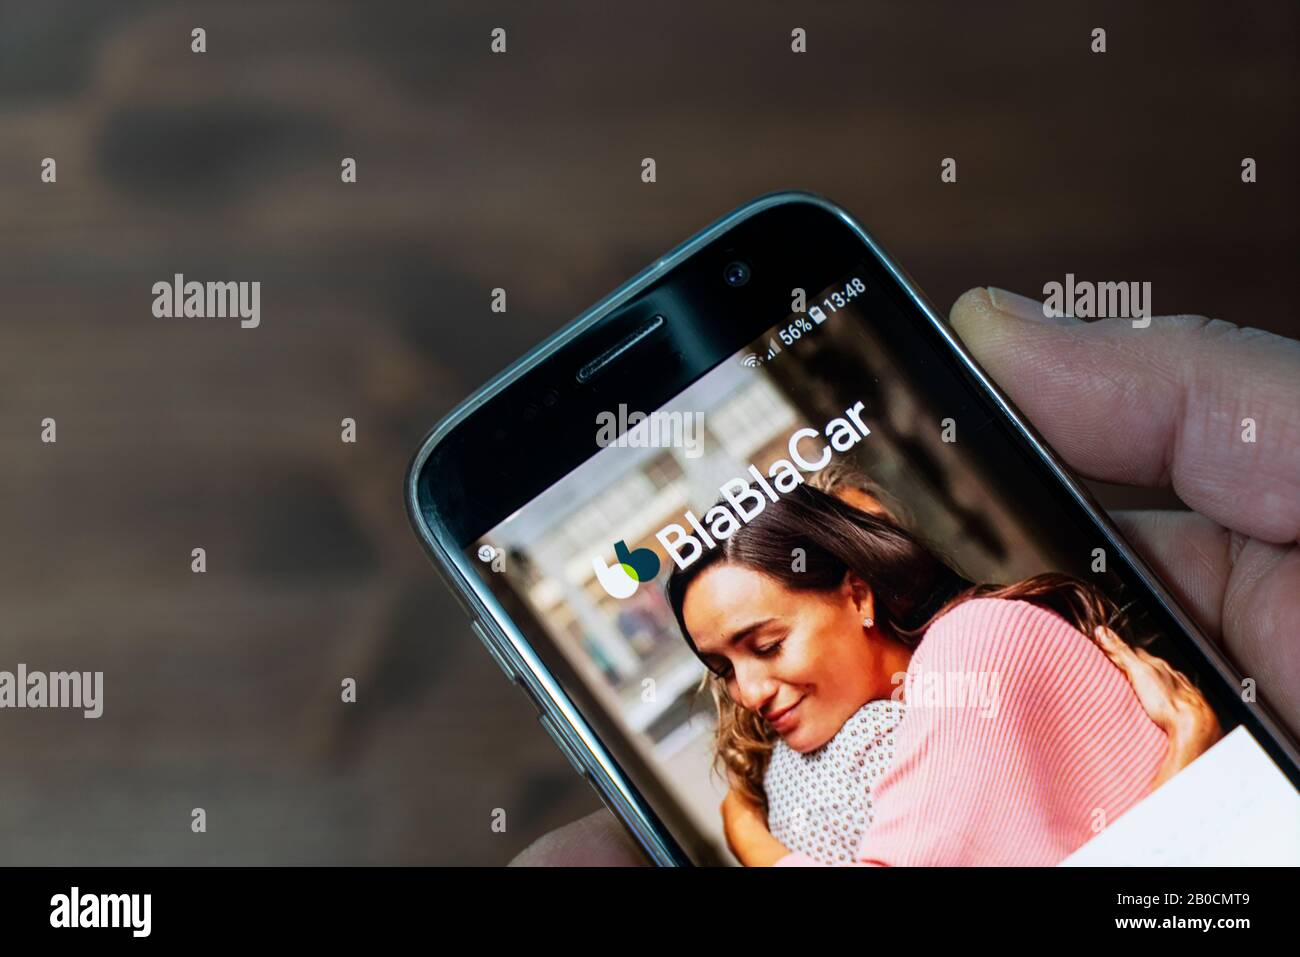 the Bla Bla Car app on a mobile phone Stock Photo